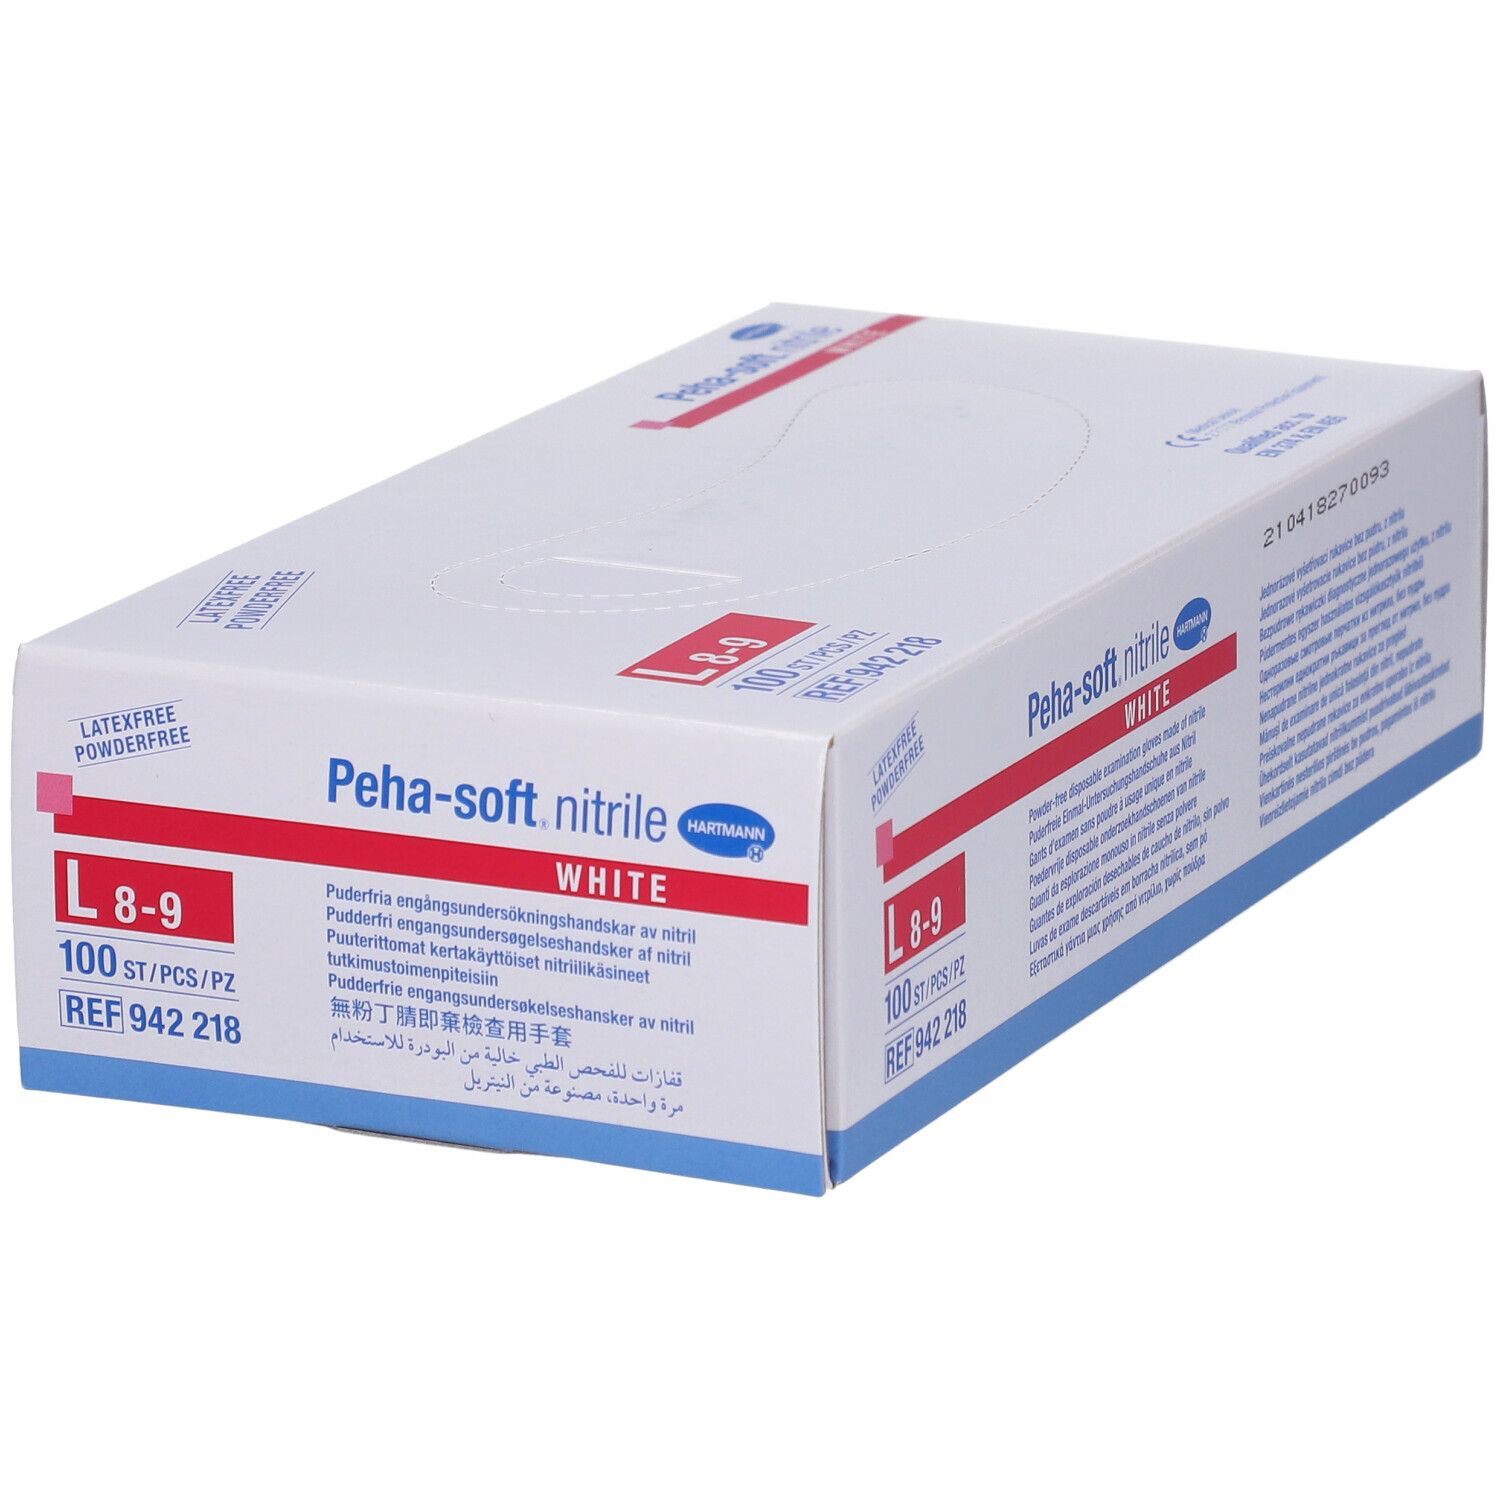 Peha-soft® nitrile white puderfrei unsteril Untersuchungshandschuhe Gr. L 8 - 9